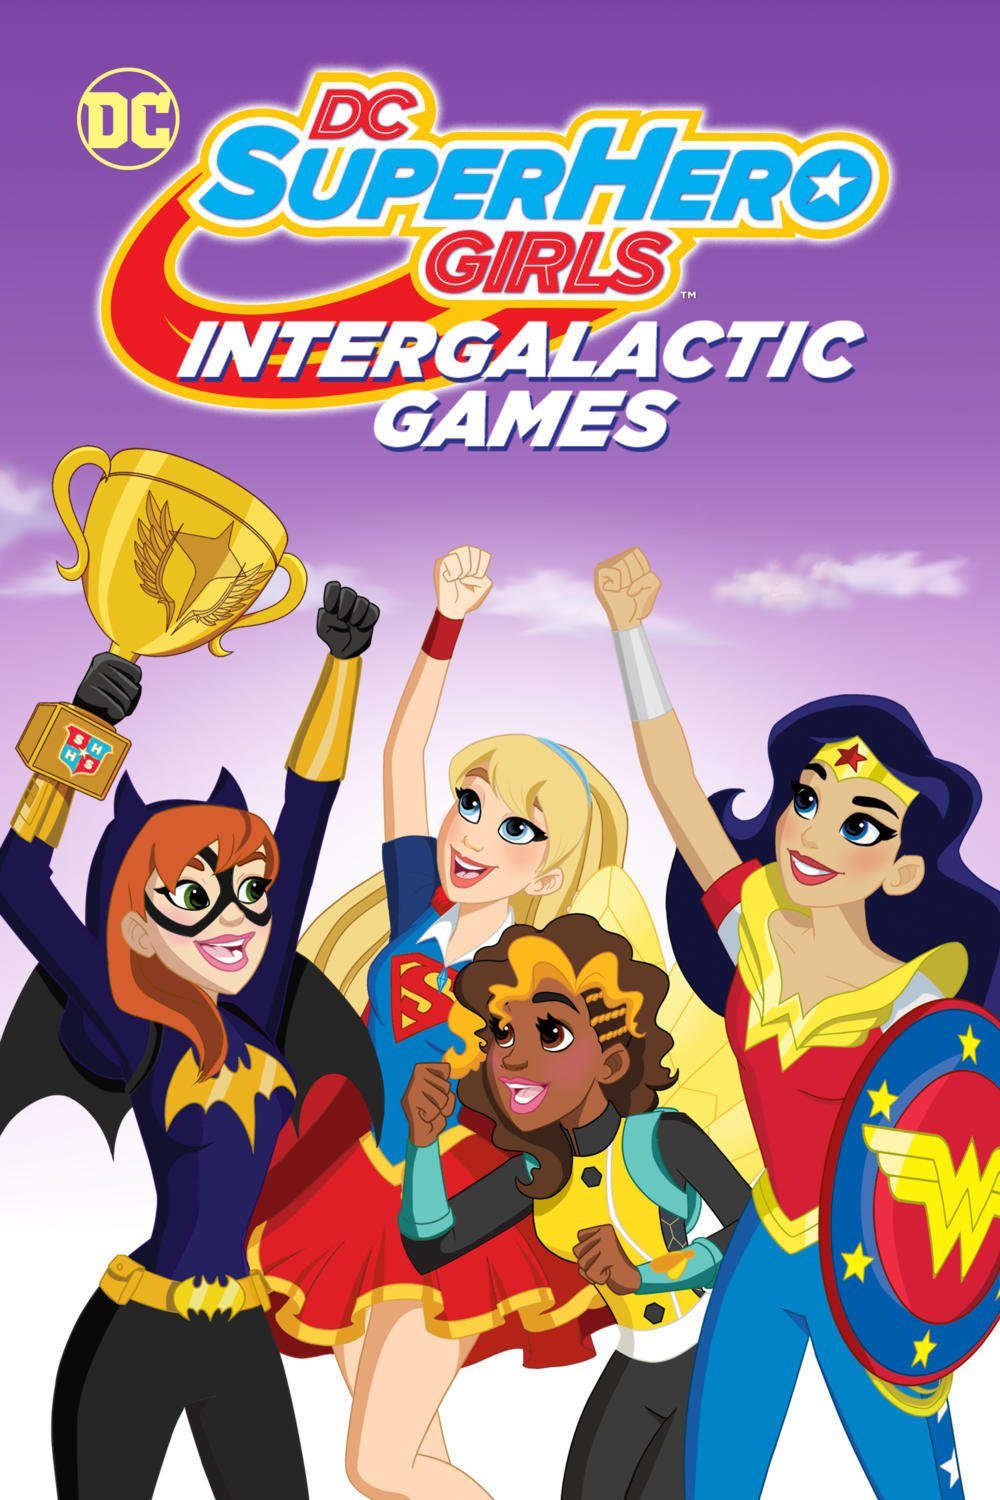 L'affiche du film DC Super Hero Girls: Intergalactic Games